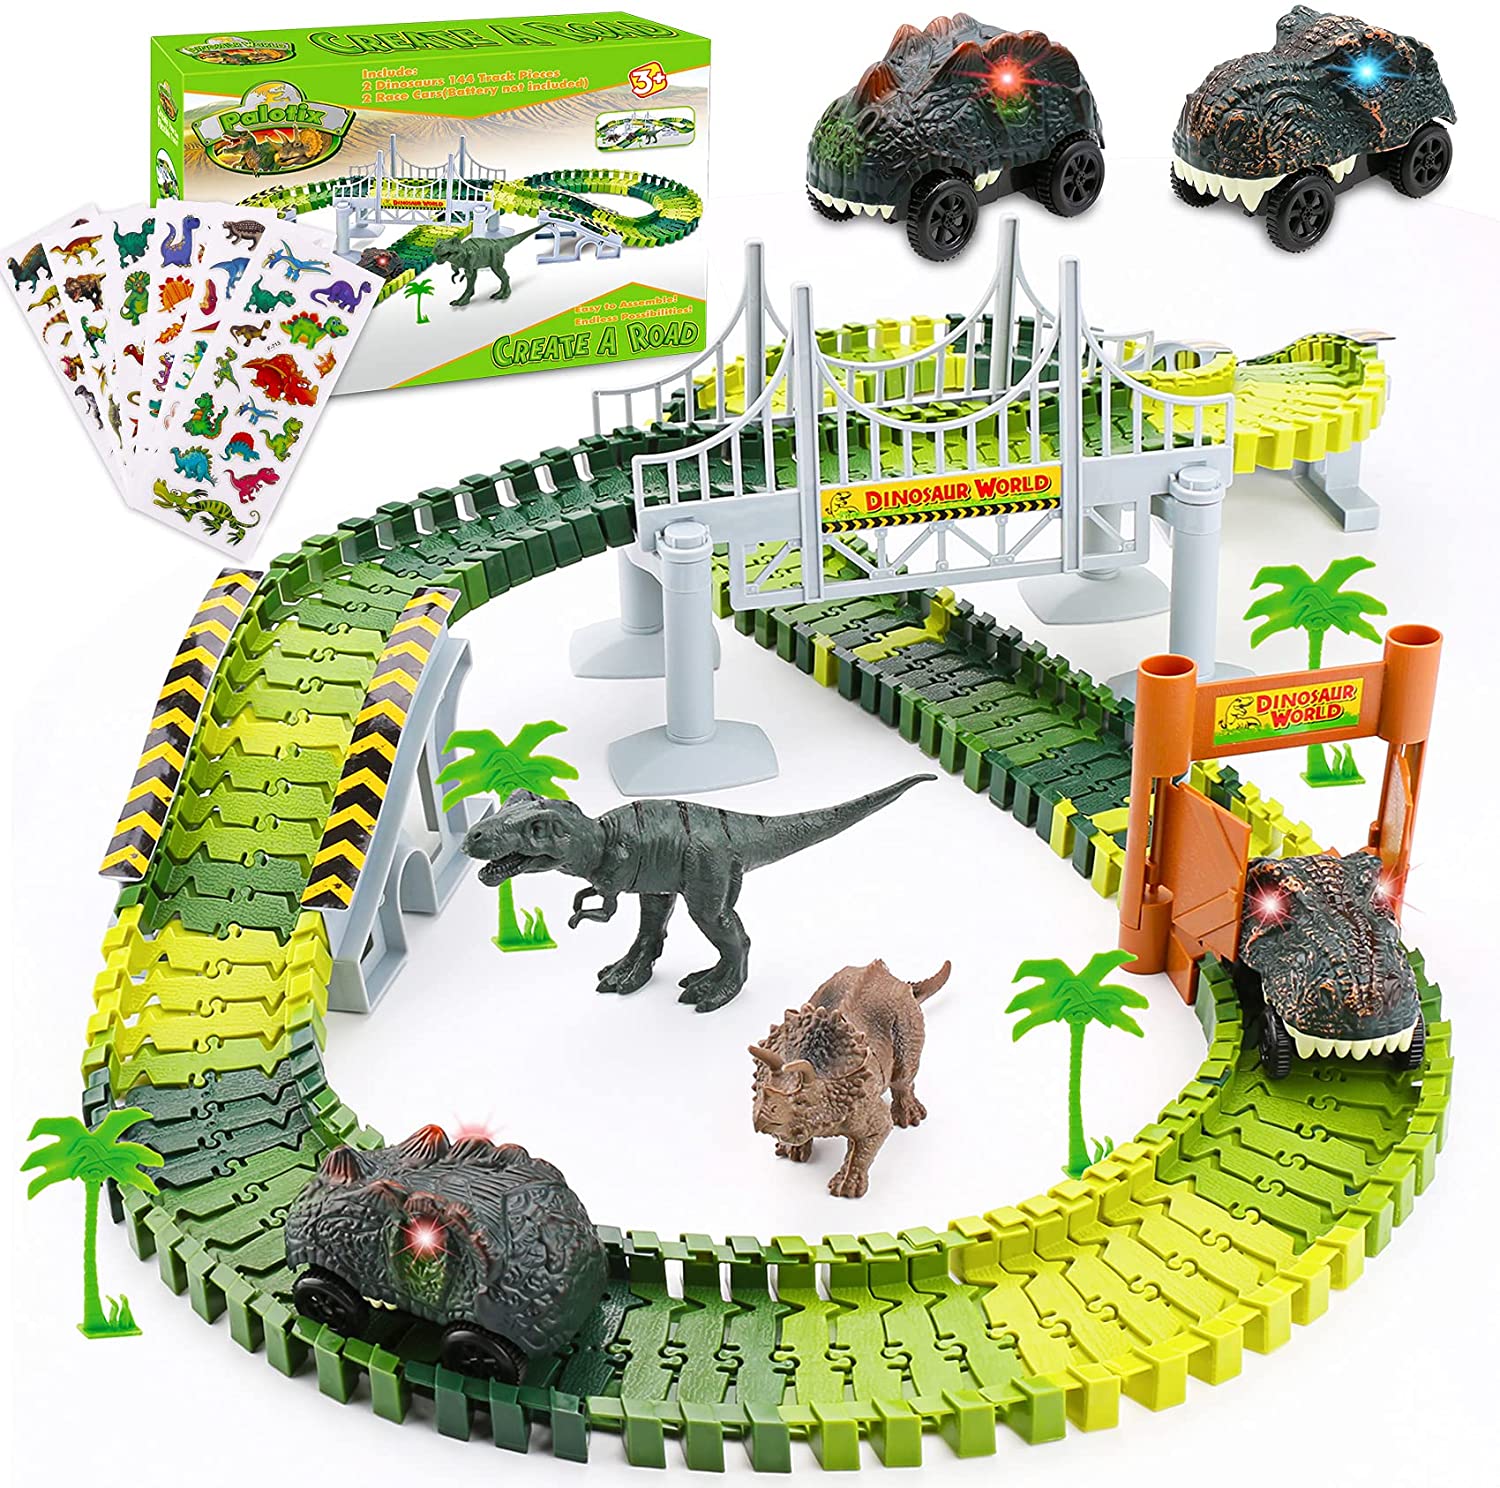 Dinosaur Track Toys - Dinosaur Race Car Track Toy Set Dinosaurs